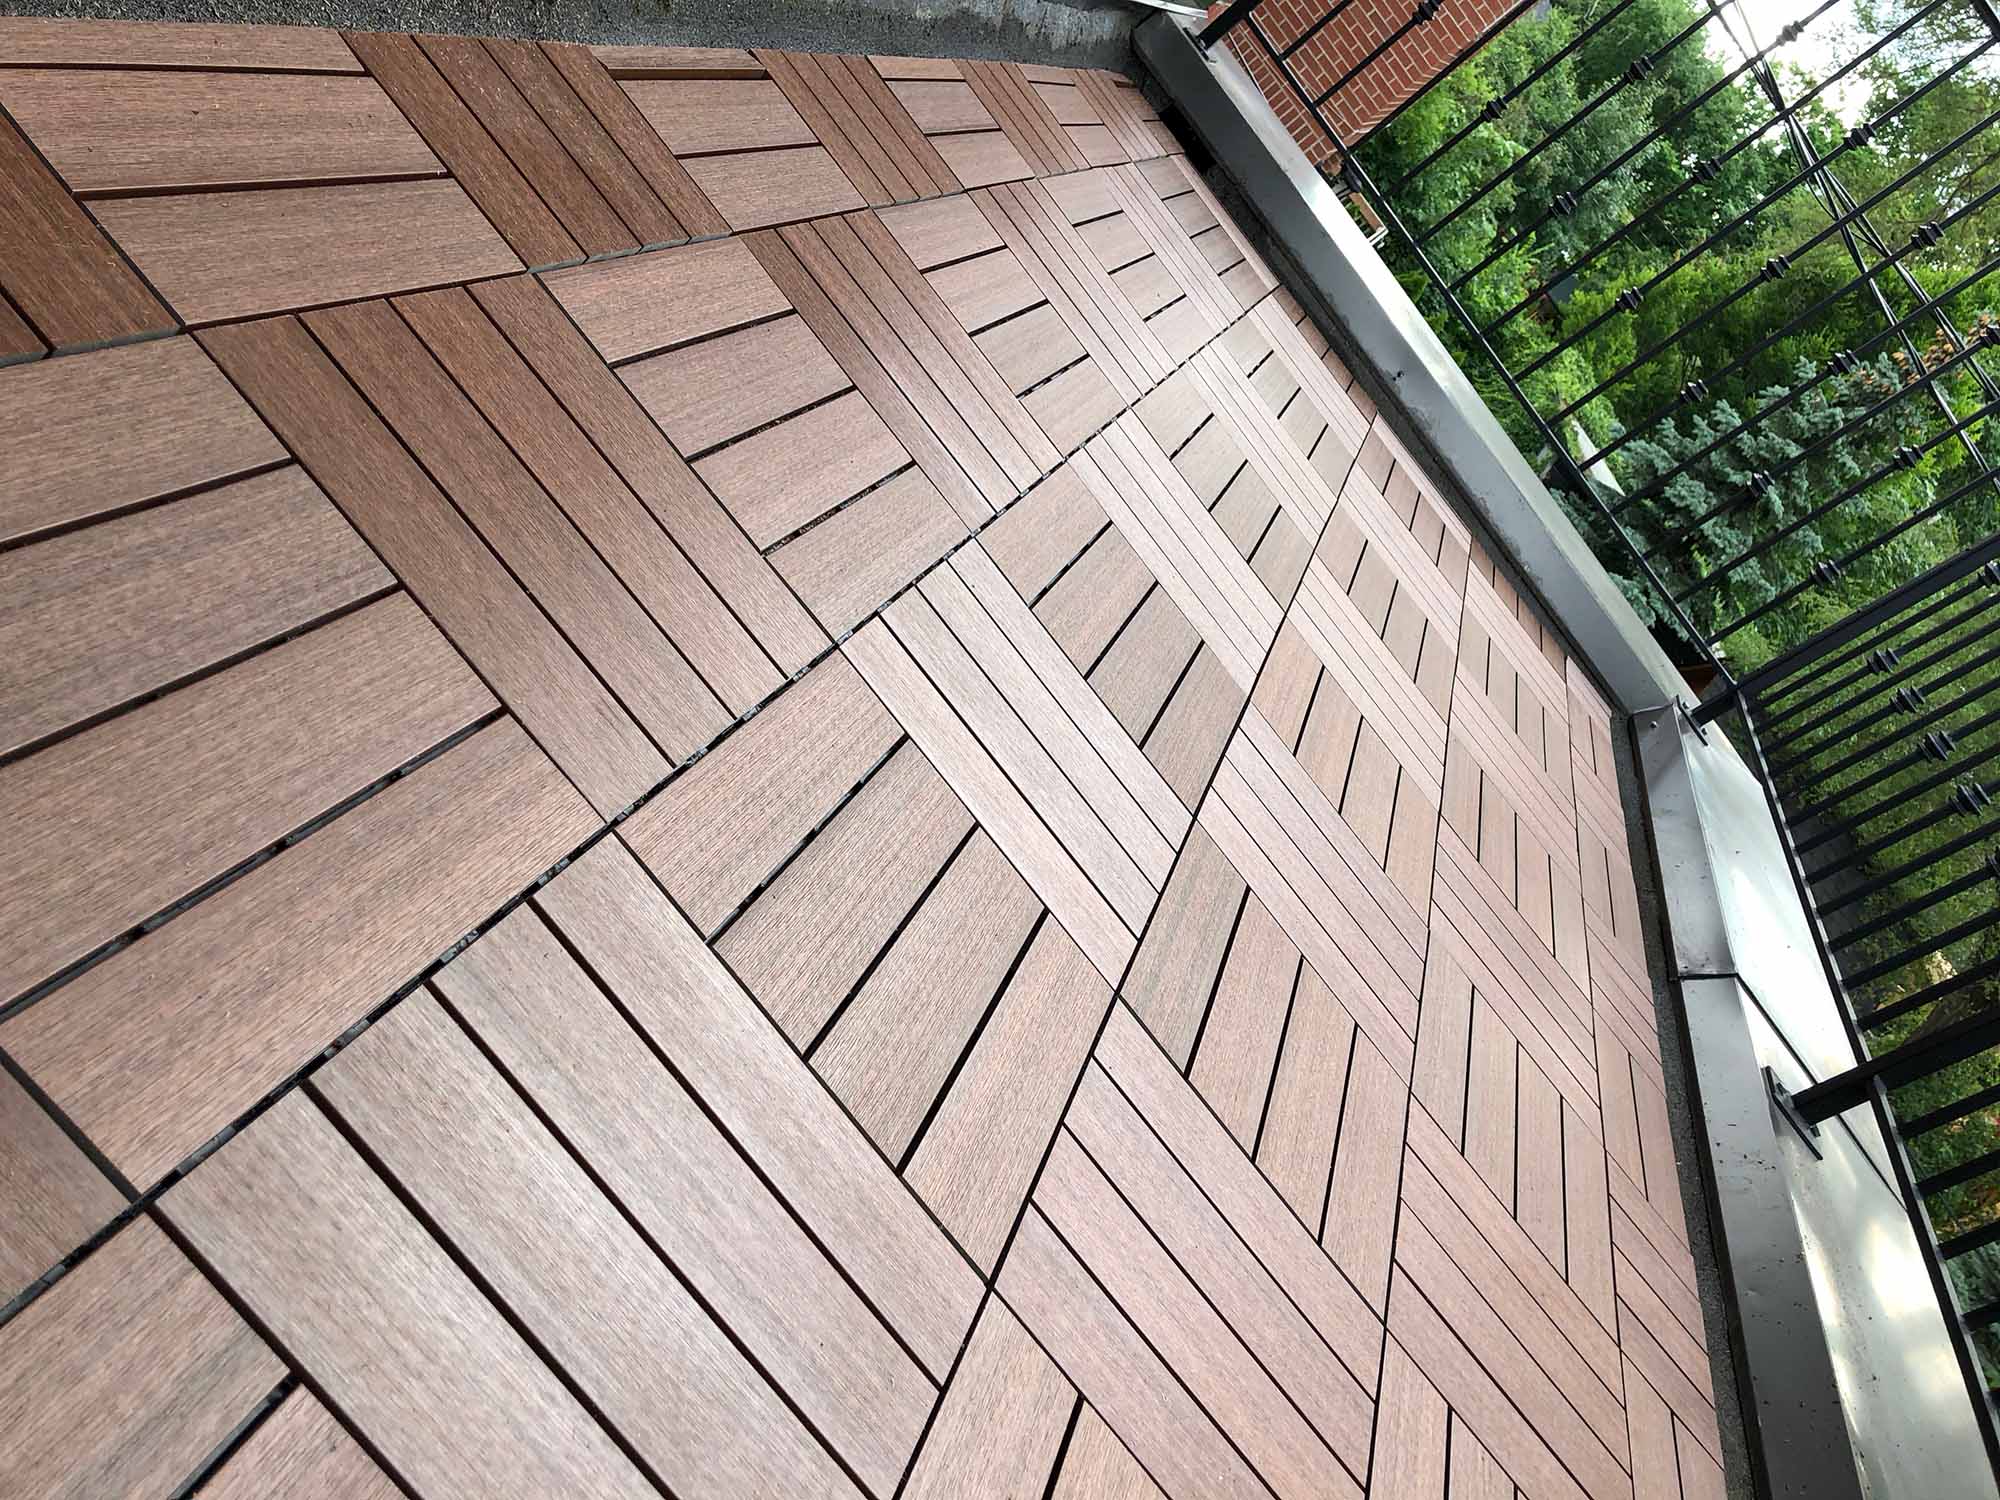 Redwood Deck Tiles in Parquet Pattern